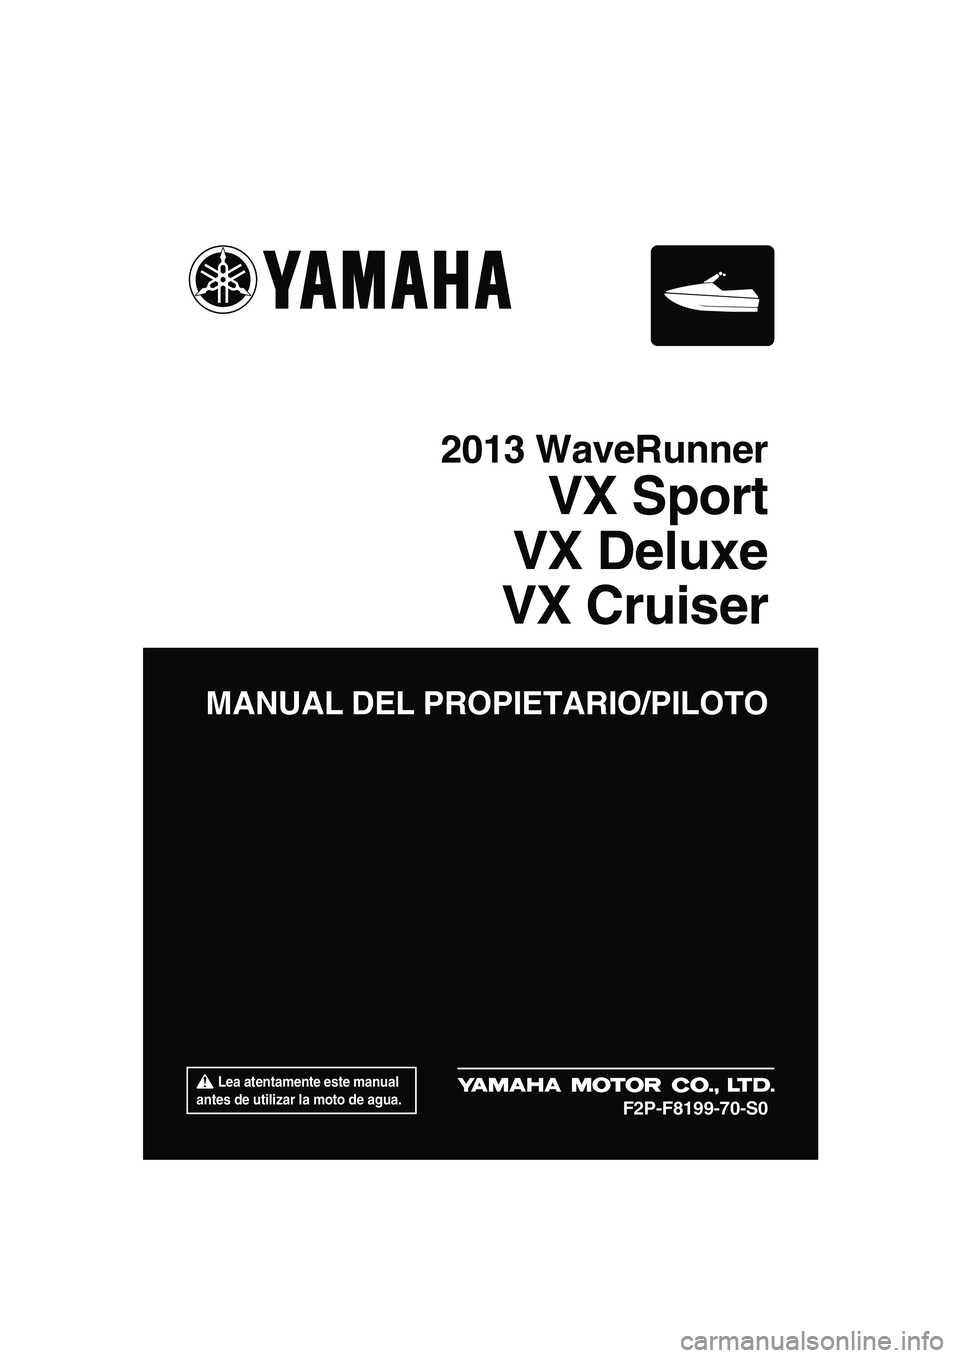 YAMAHA VX SPORT 2013  Manuale de Empleo (in Spanish)  Lea atentamente este manual 
antes de utilizar la moto de agua.
MANUAL DEL PROPIETARIO/PILOTO
2013 WaveRunner
VX Sport
VX Deluxe
VX Cruiser
F2P-F8199-70-S0
UF2P70S0.book  Page 1  Tuesday, July 24, 20